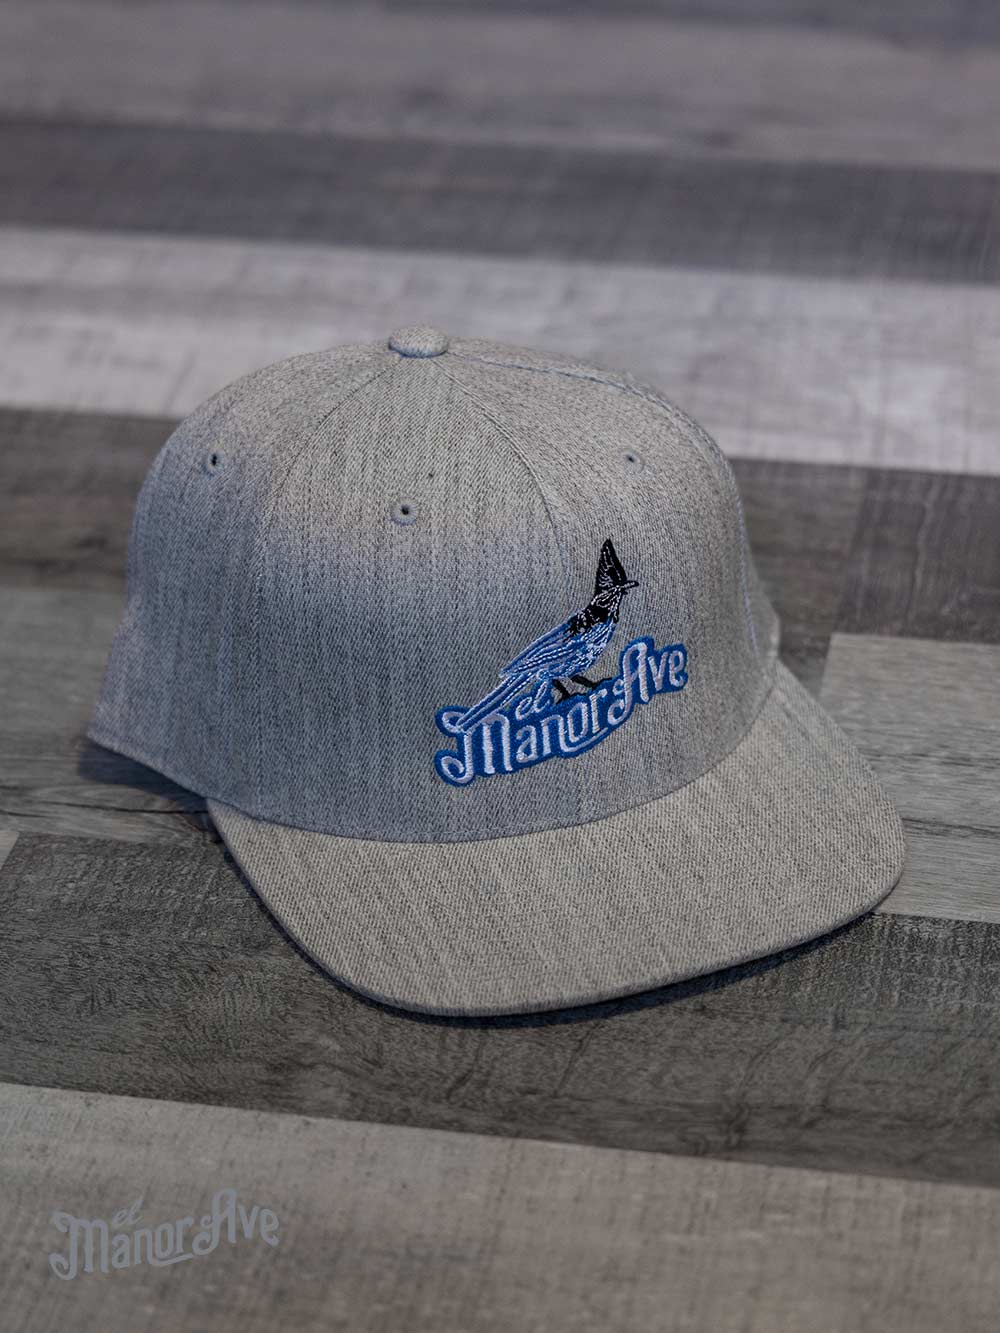 Shark Fin Snapback Hat